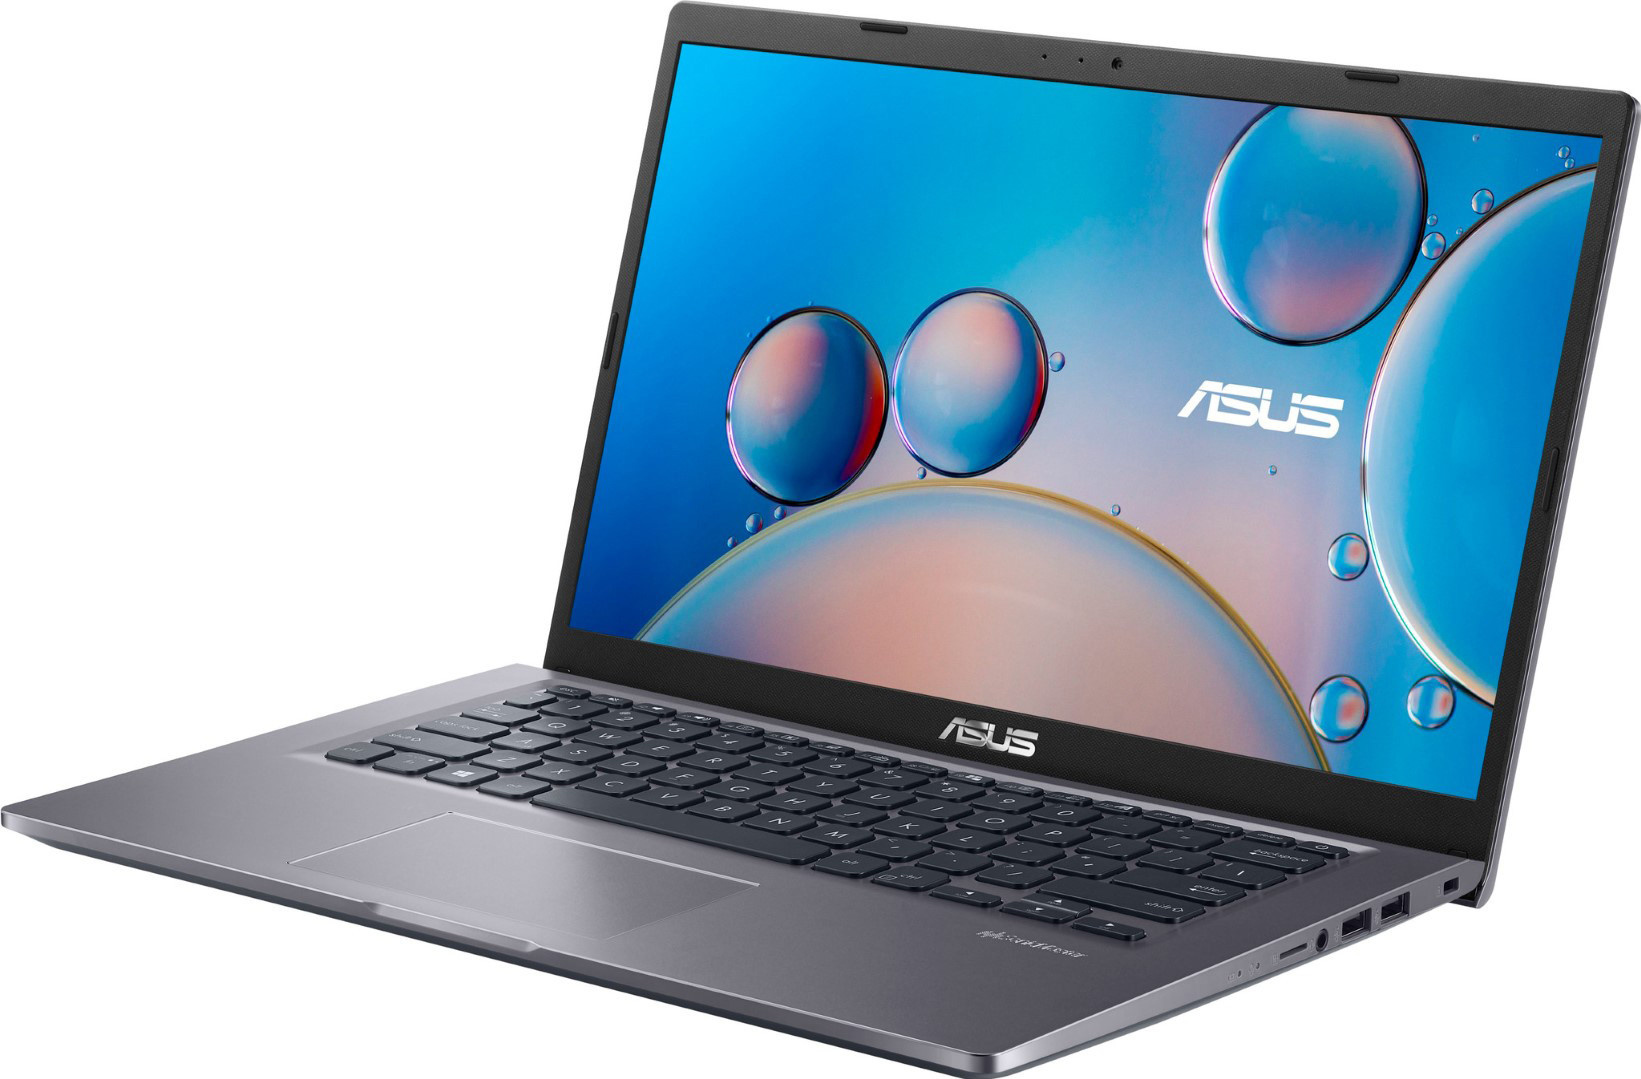 ASUS 14 inch Laptop (X415JA-EB110T)